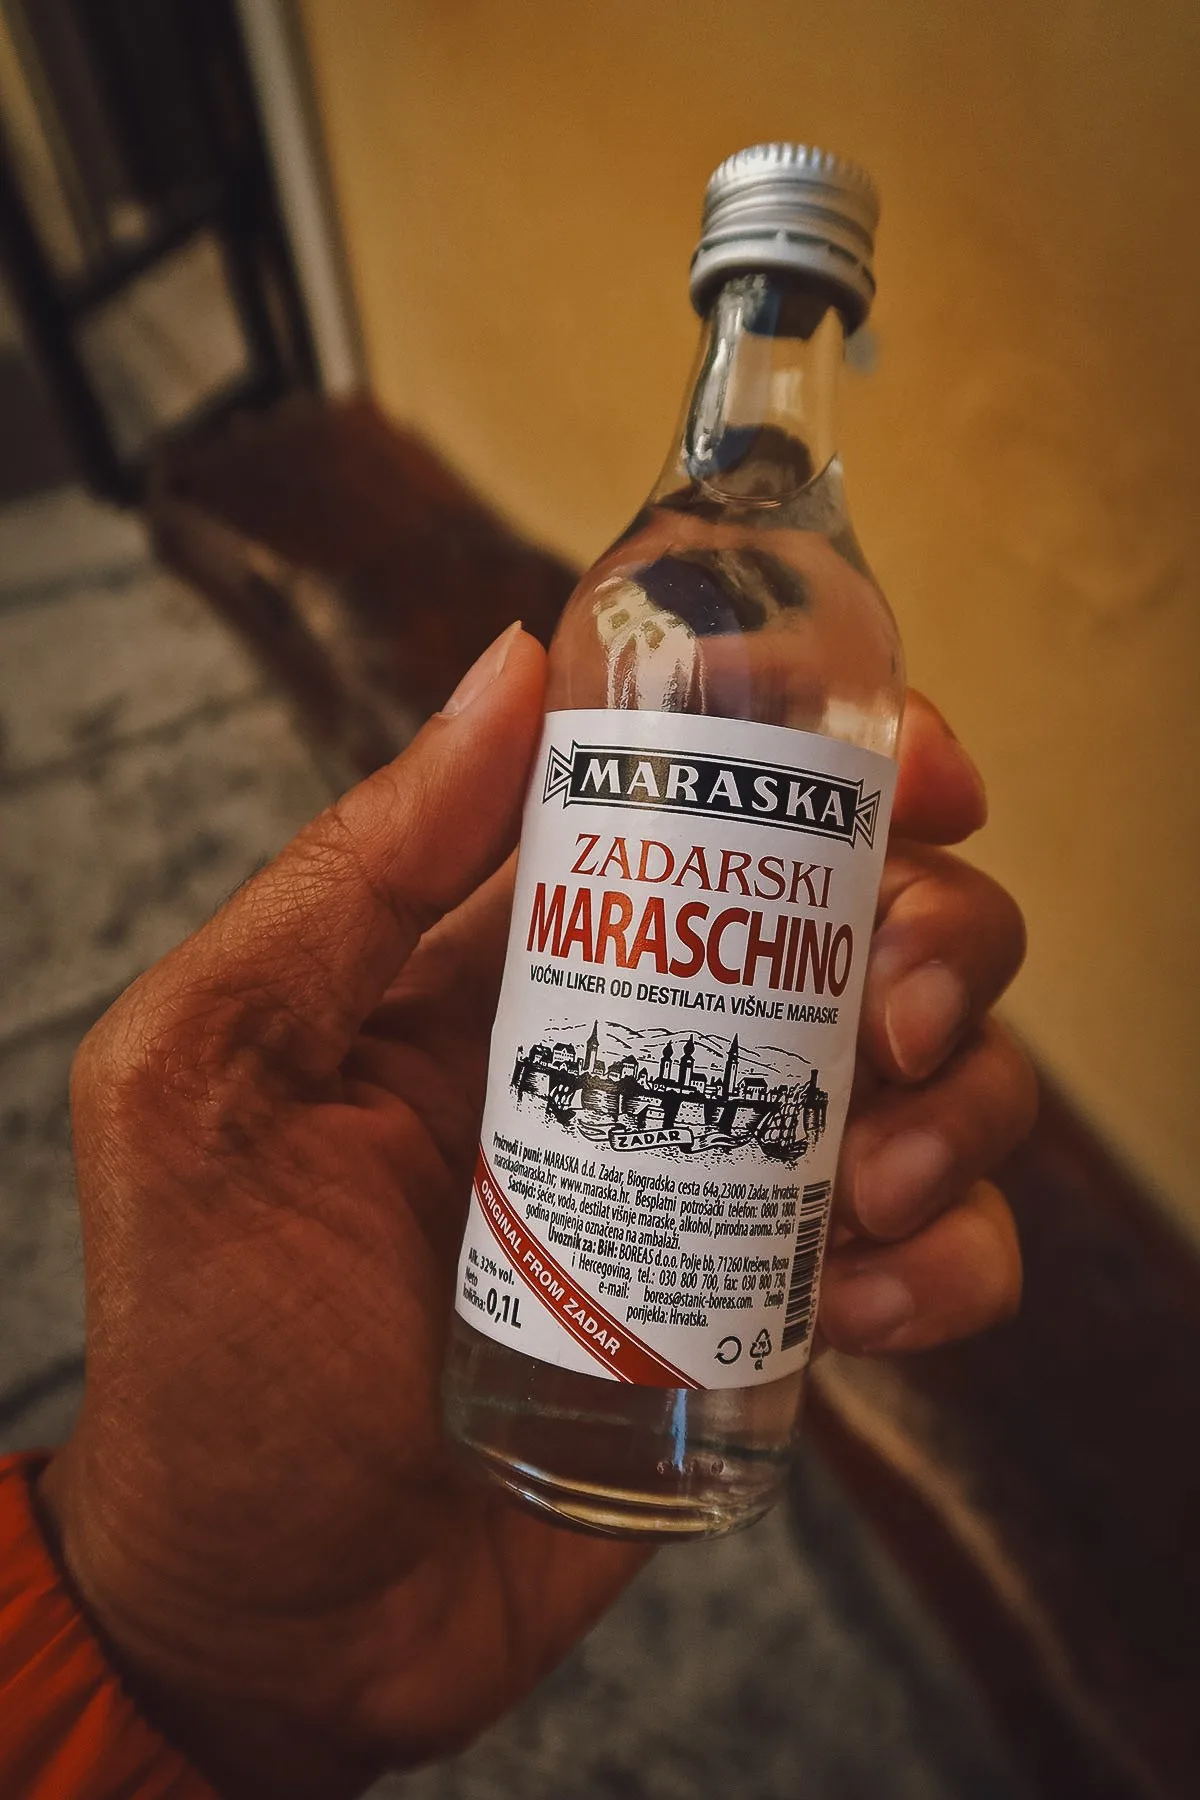 Maraschino liqueur from a store in Zadar